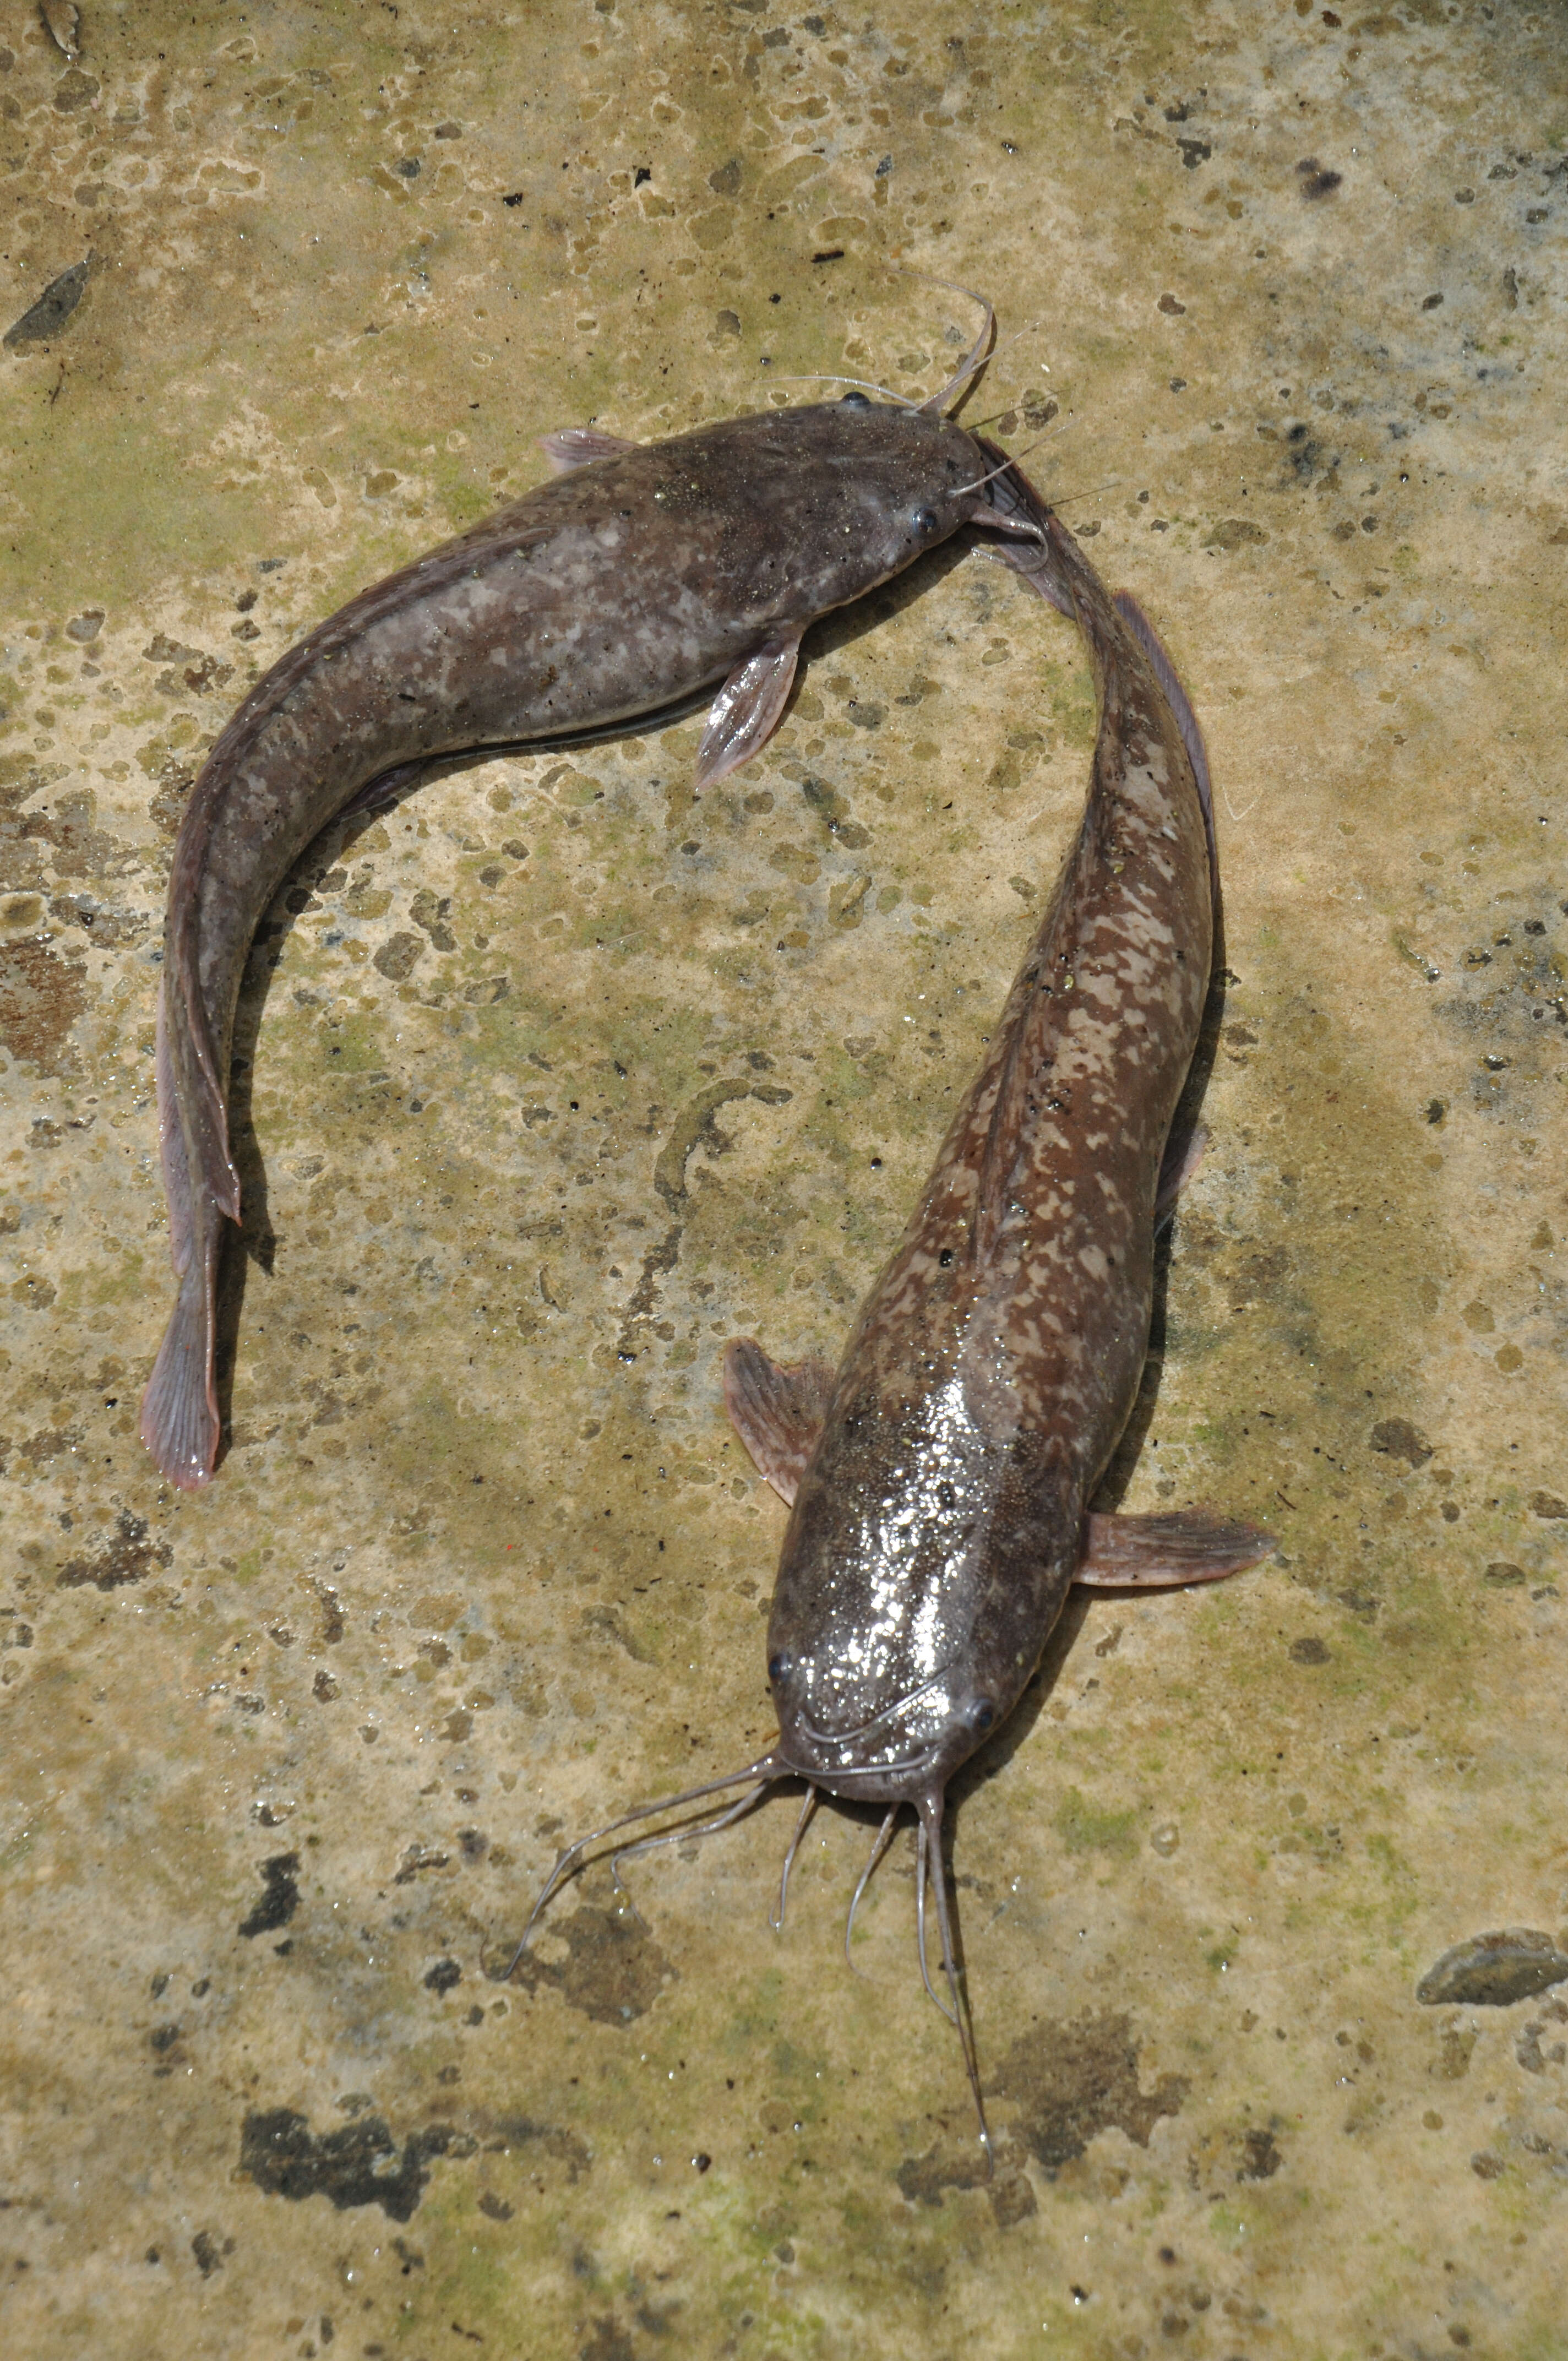 Image of Walking catfish